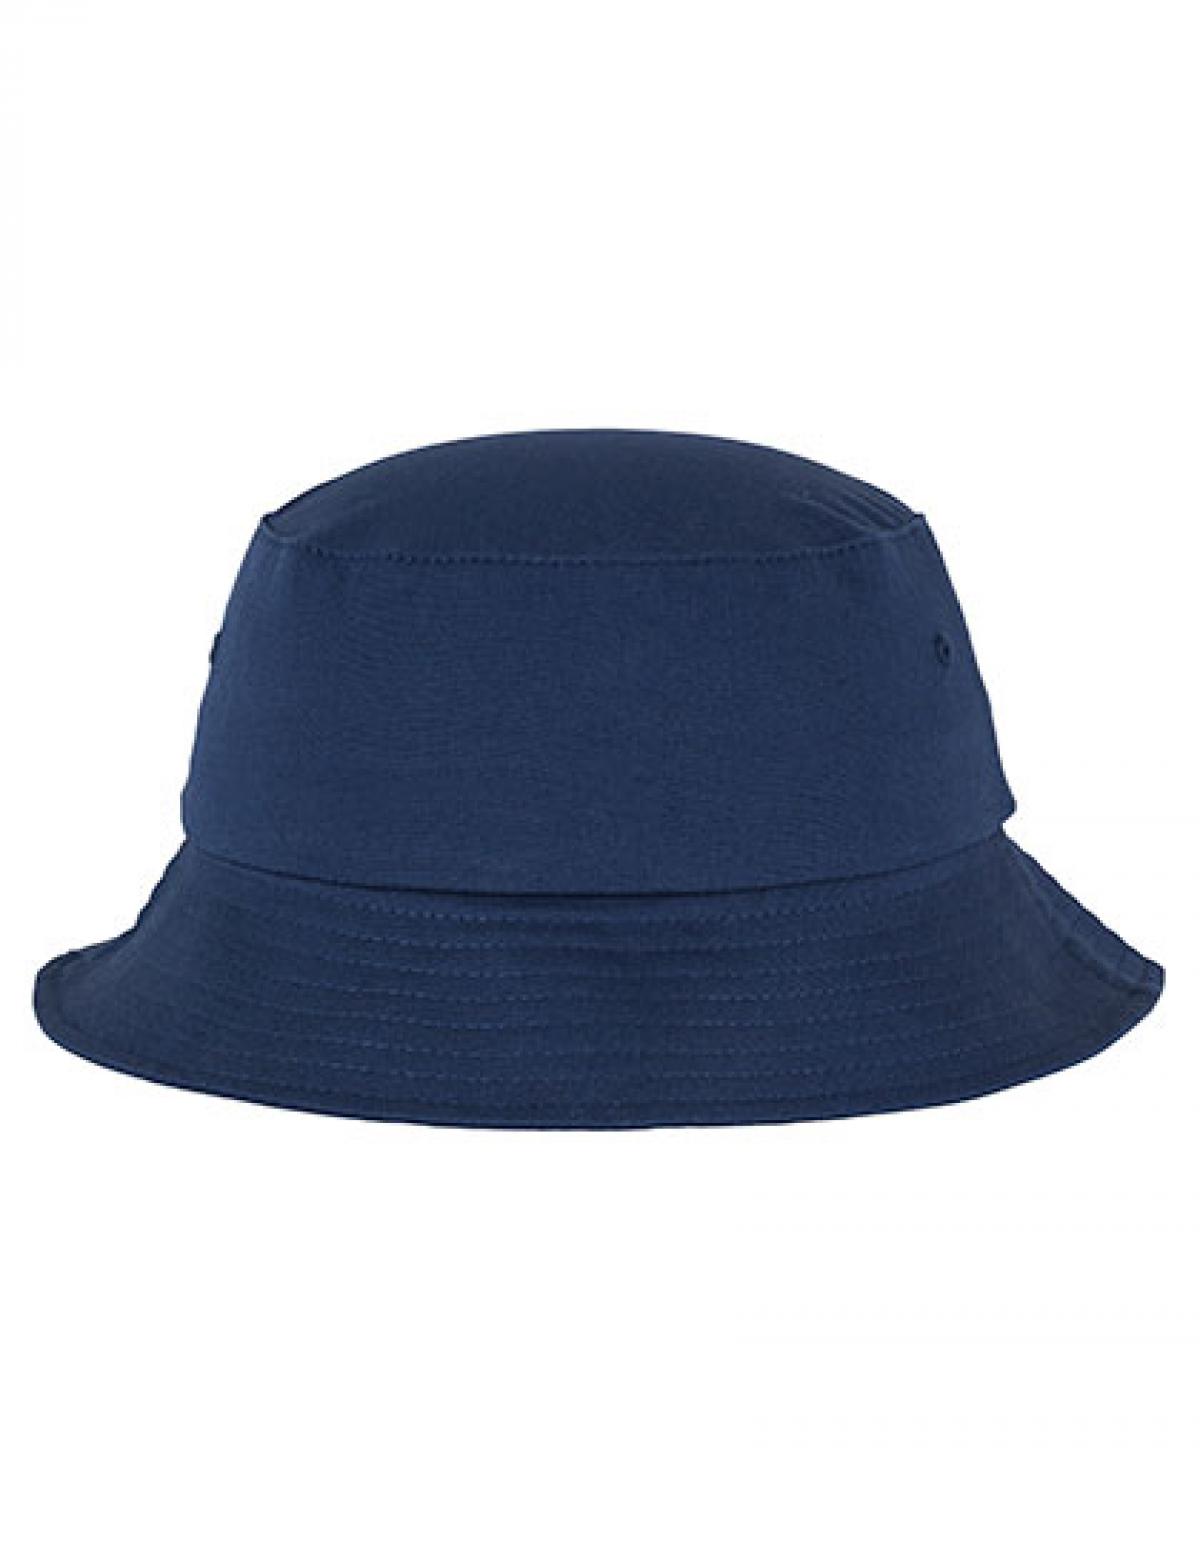 FLEXFIT Twill eBay | Hat Kappe / Mütze Bucket / Hut / | Cotton